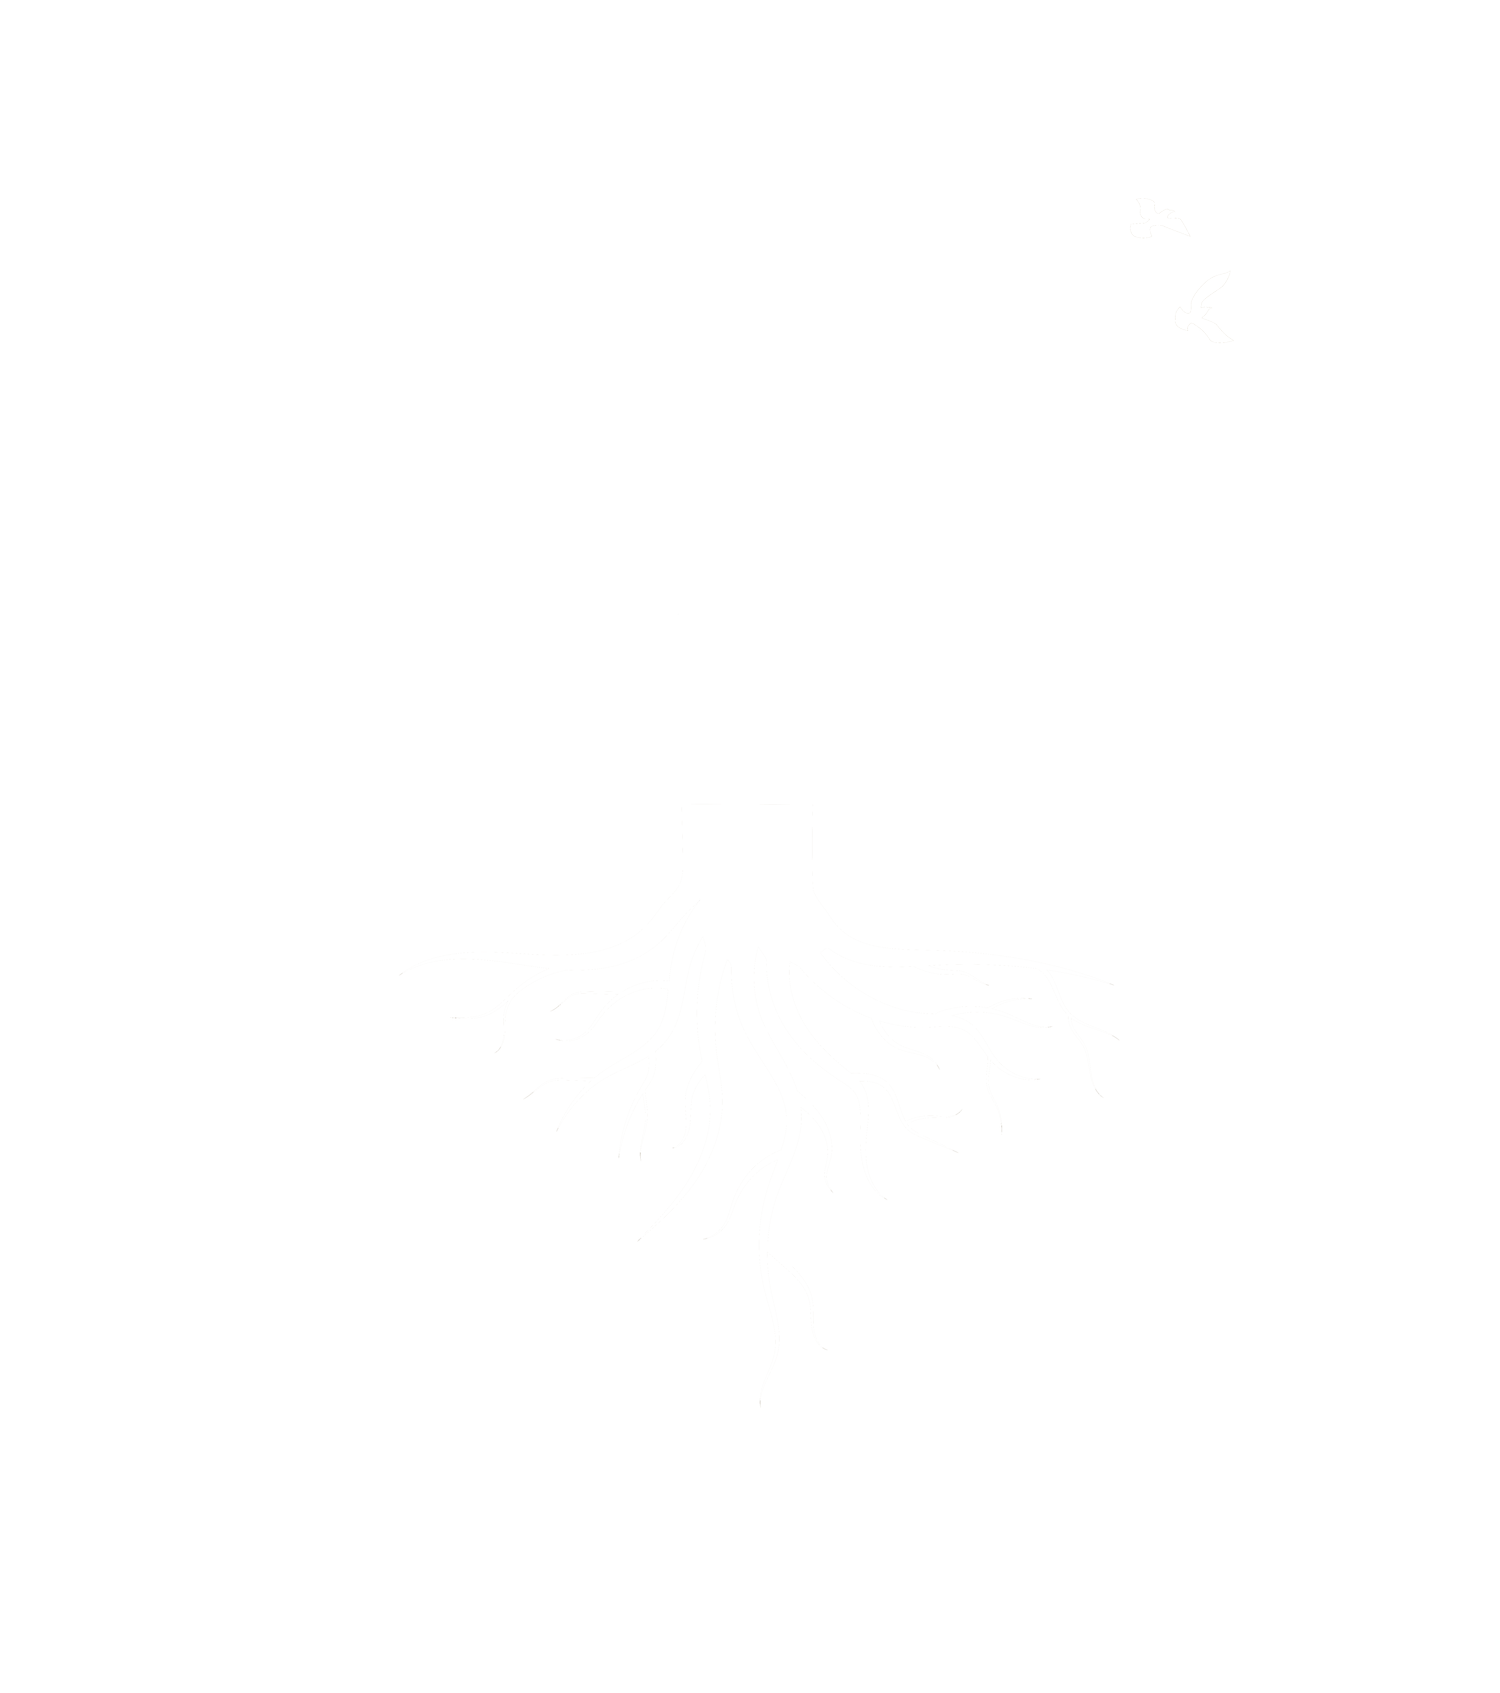 Deep Earth Press